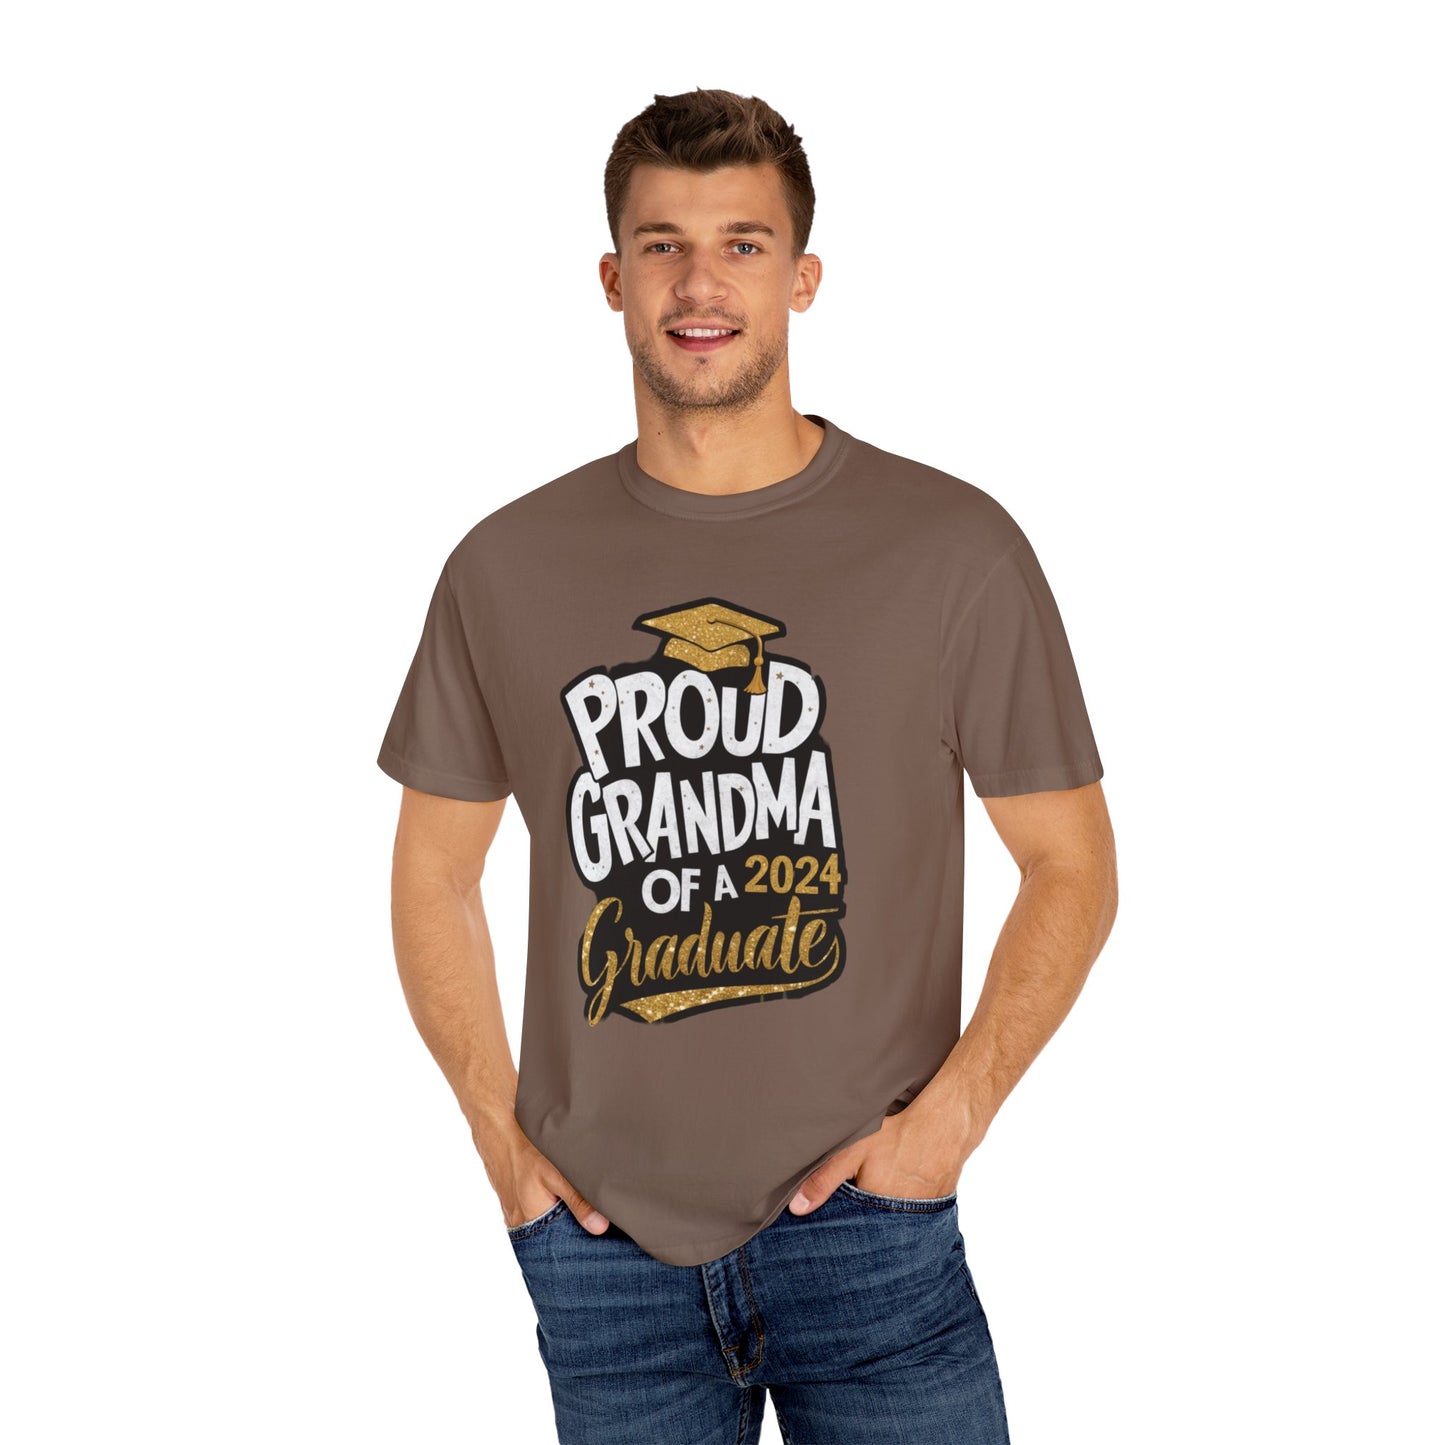 Proud of Grandma 2024 Graduate Unisex Garment-dyed T-shirt Cotton Funny Humorous Graphic Soft Premium Unisex Men Women Espresso T-shirt Birthday Gift-60